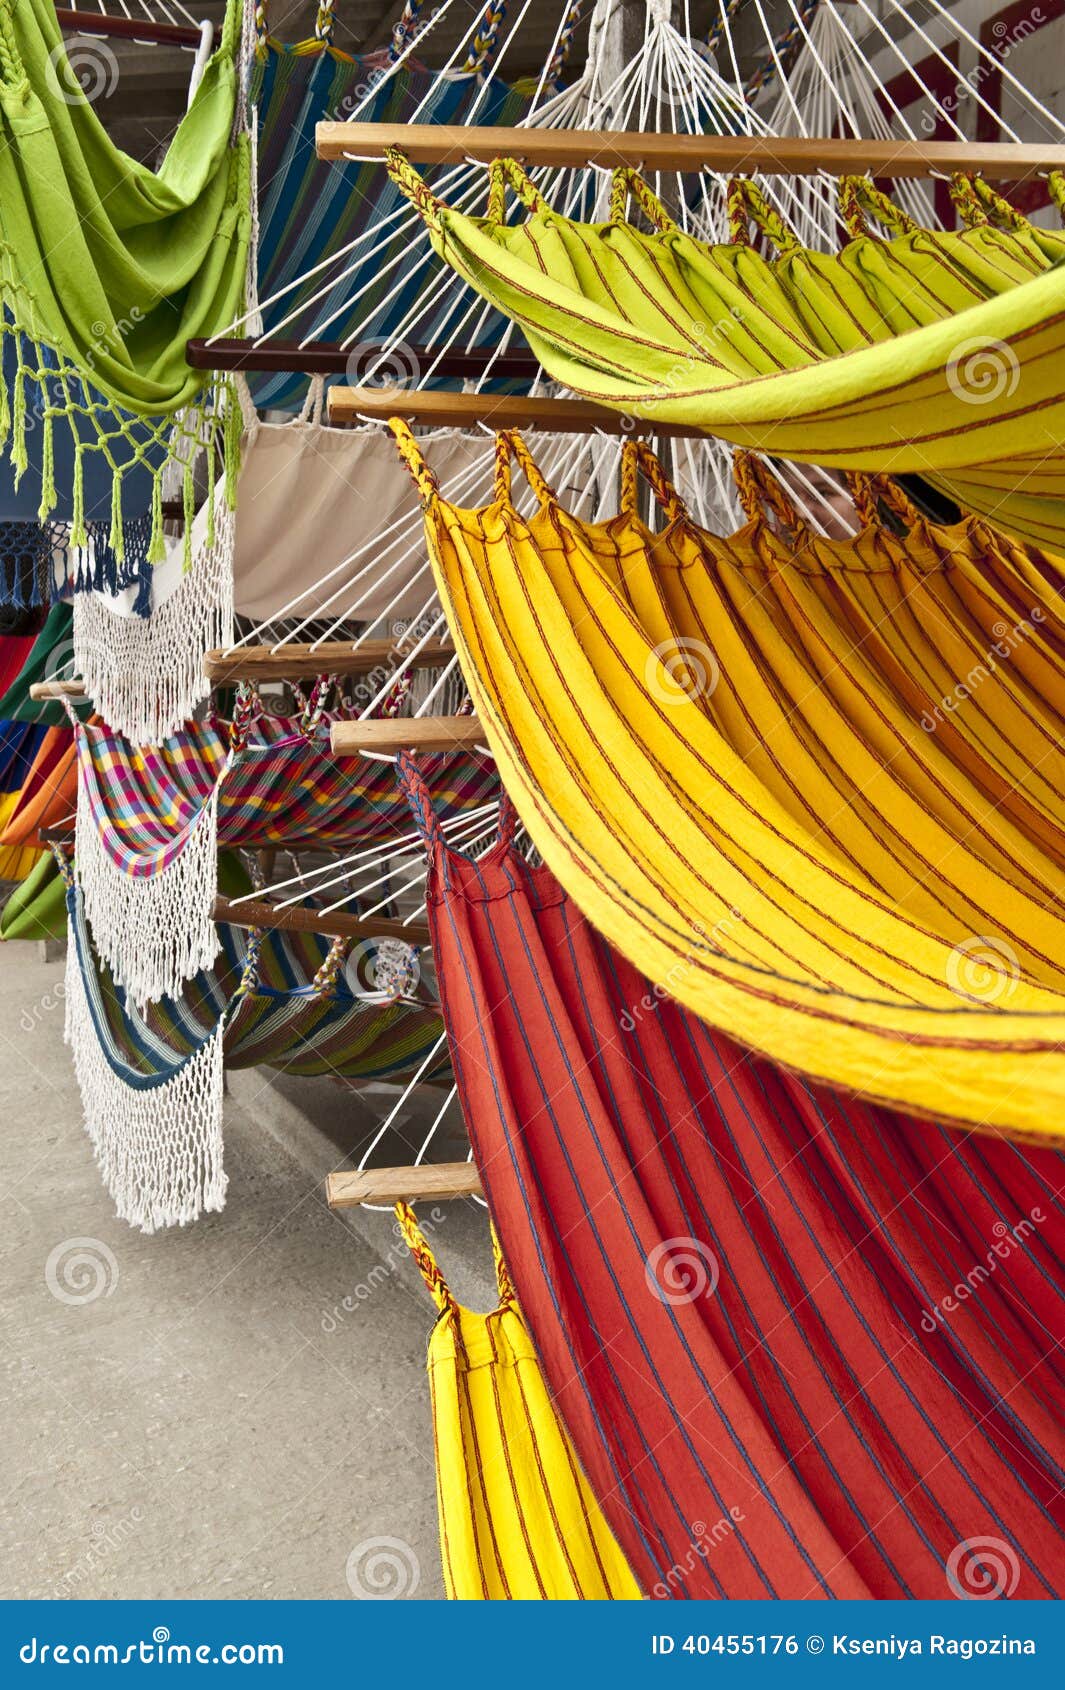 hammocks in ecuador